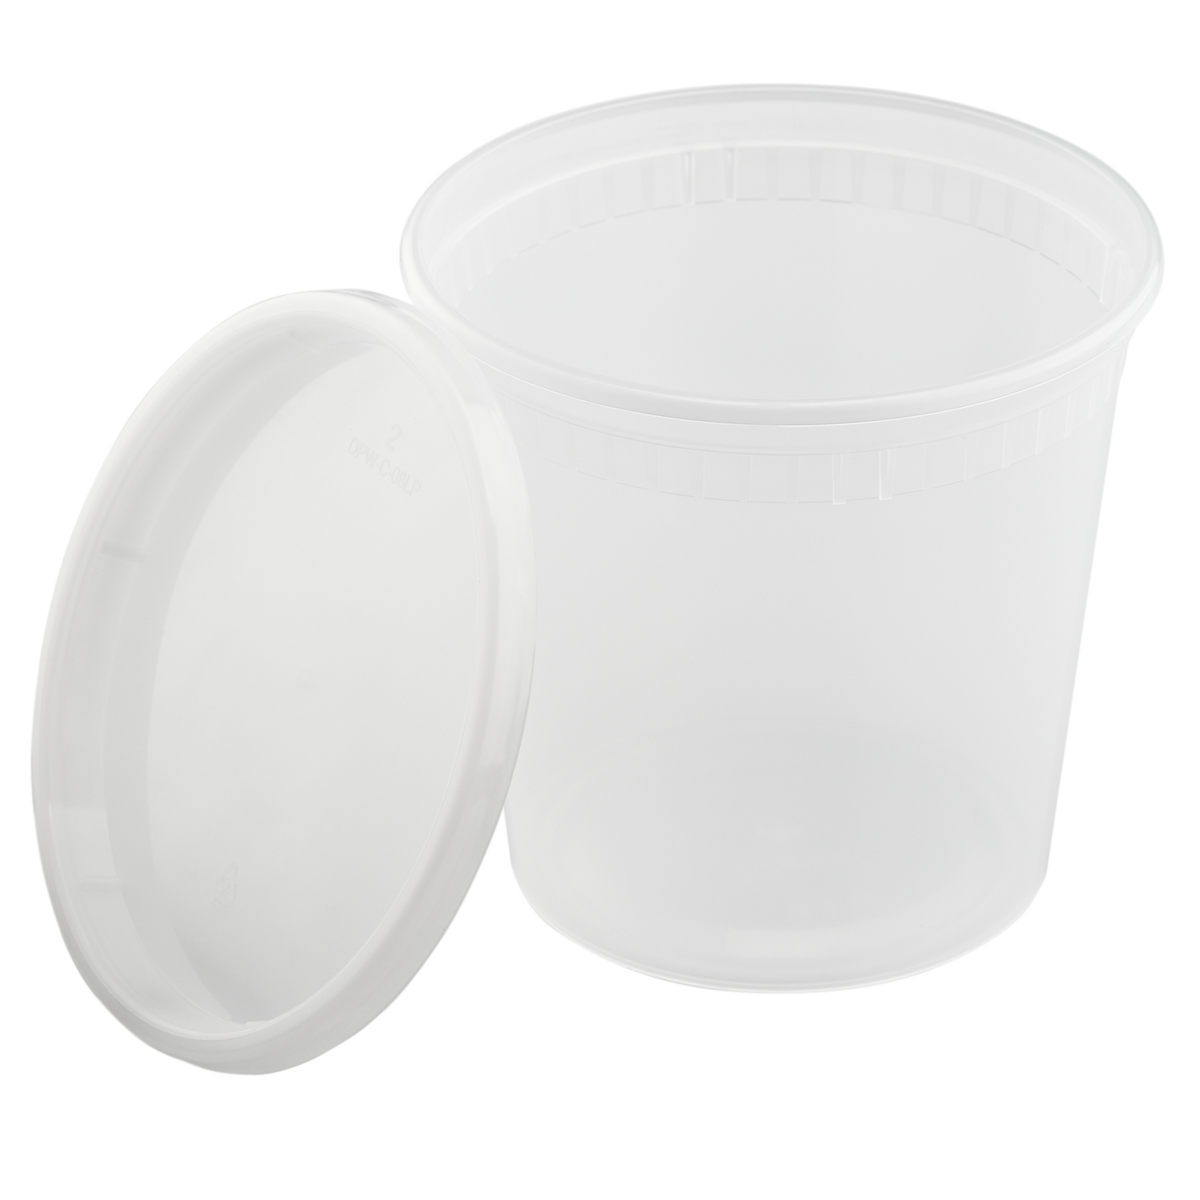 Klex Deli Soup Containers with Airtight Lids, BPA Free, 24 oz, Translucent, 12 Sets